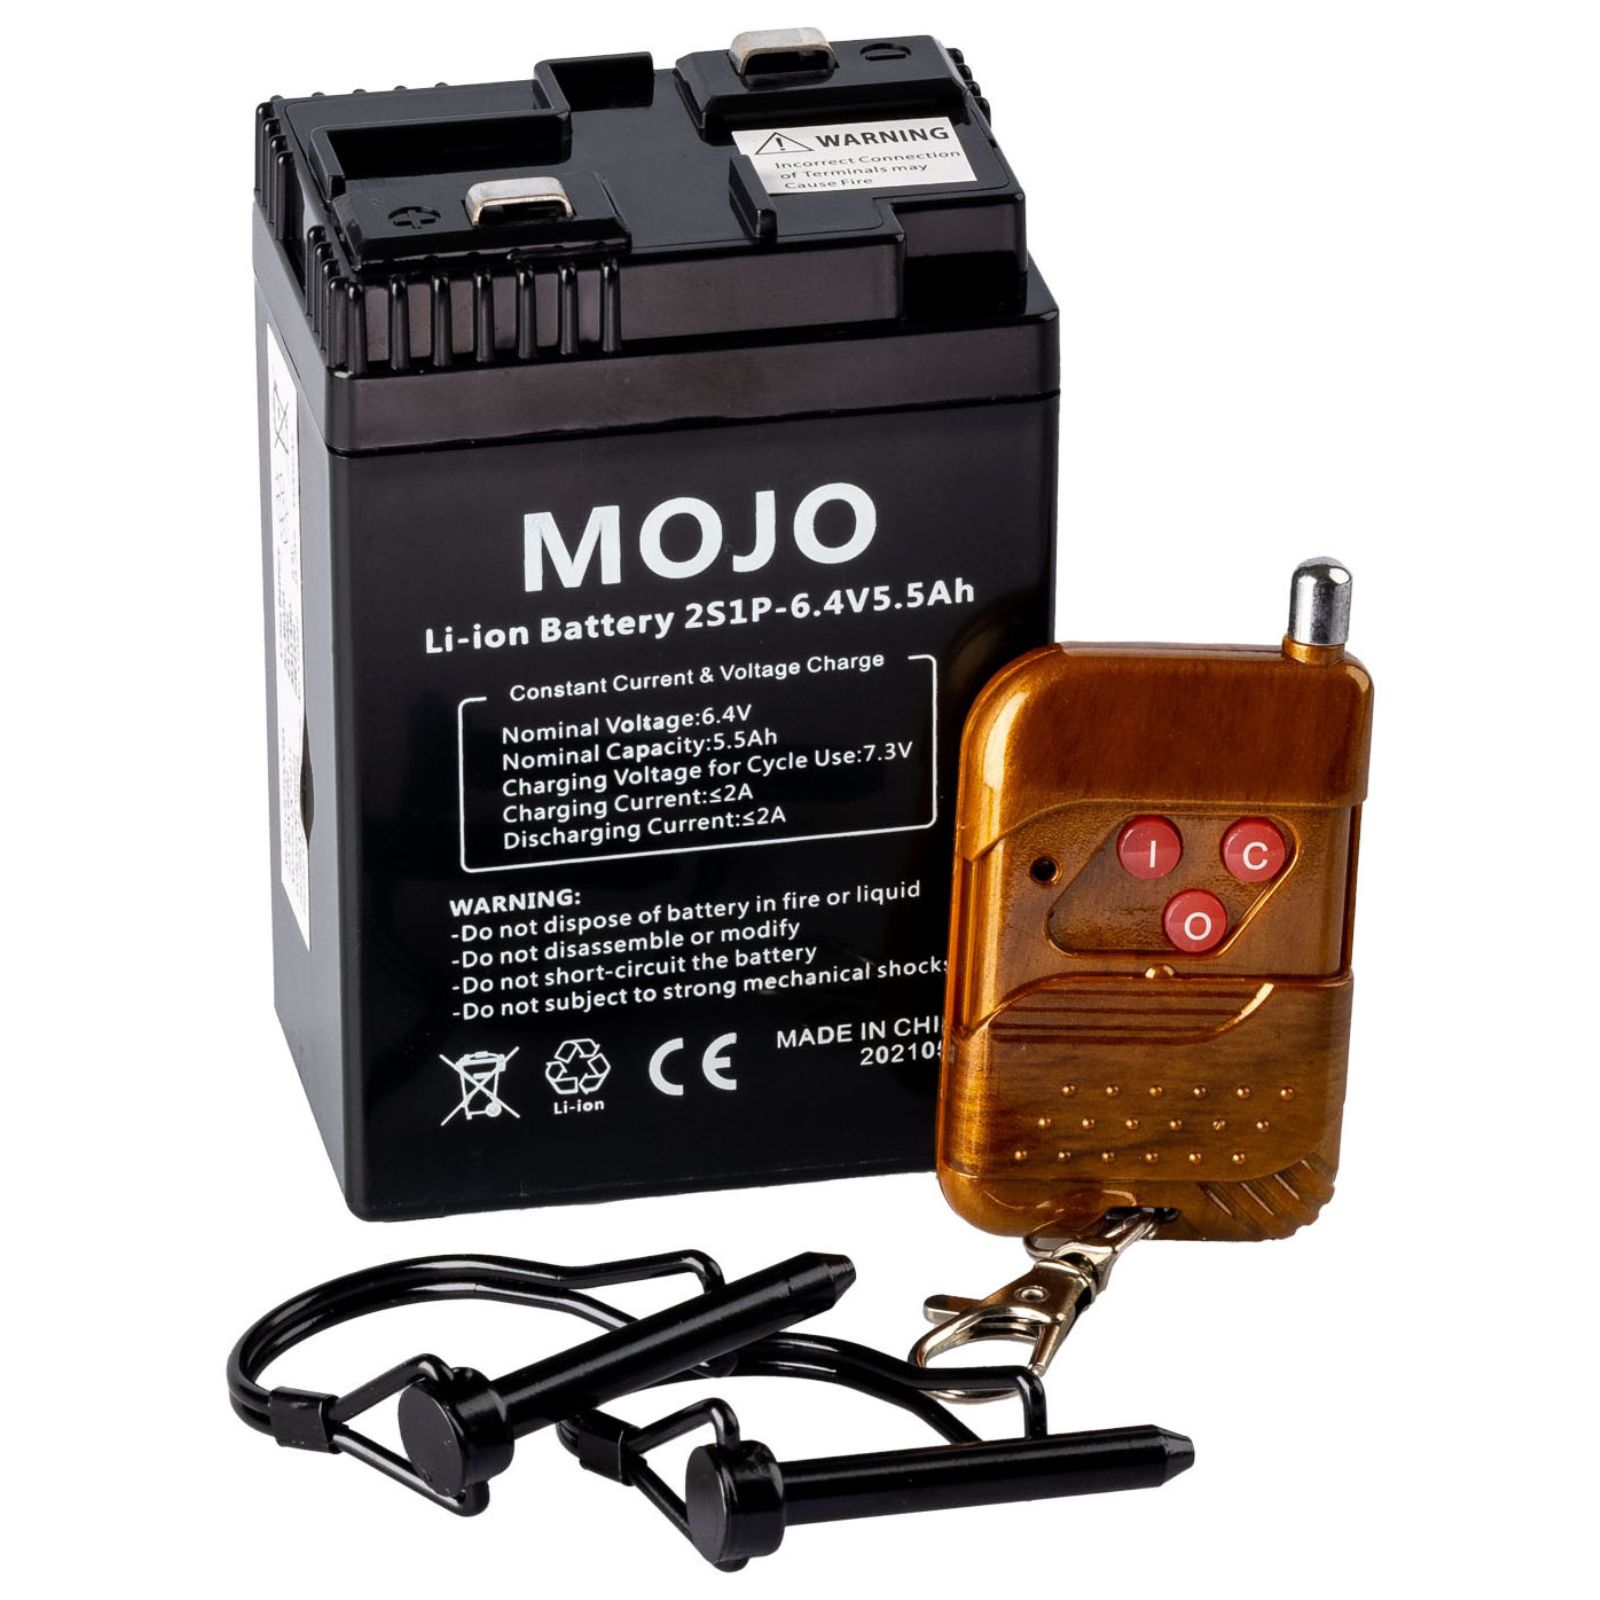 Mojo ES KING Mallard avec batterie Lio-ion